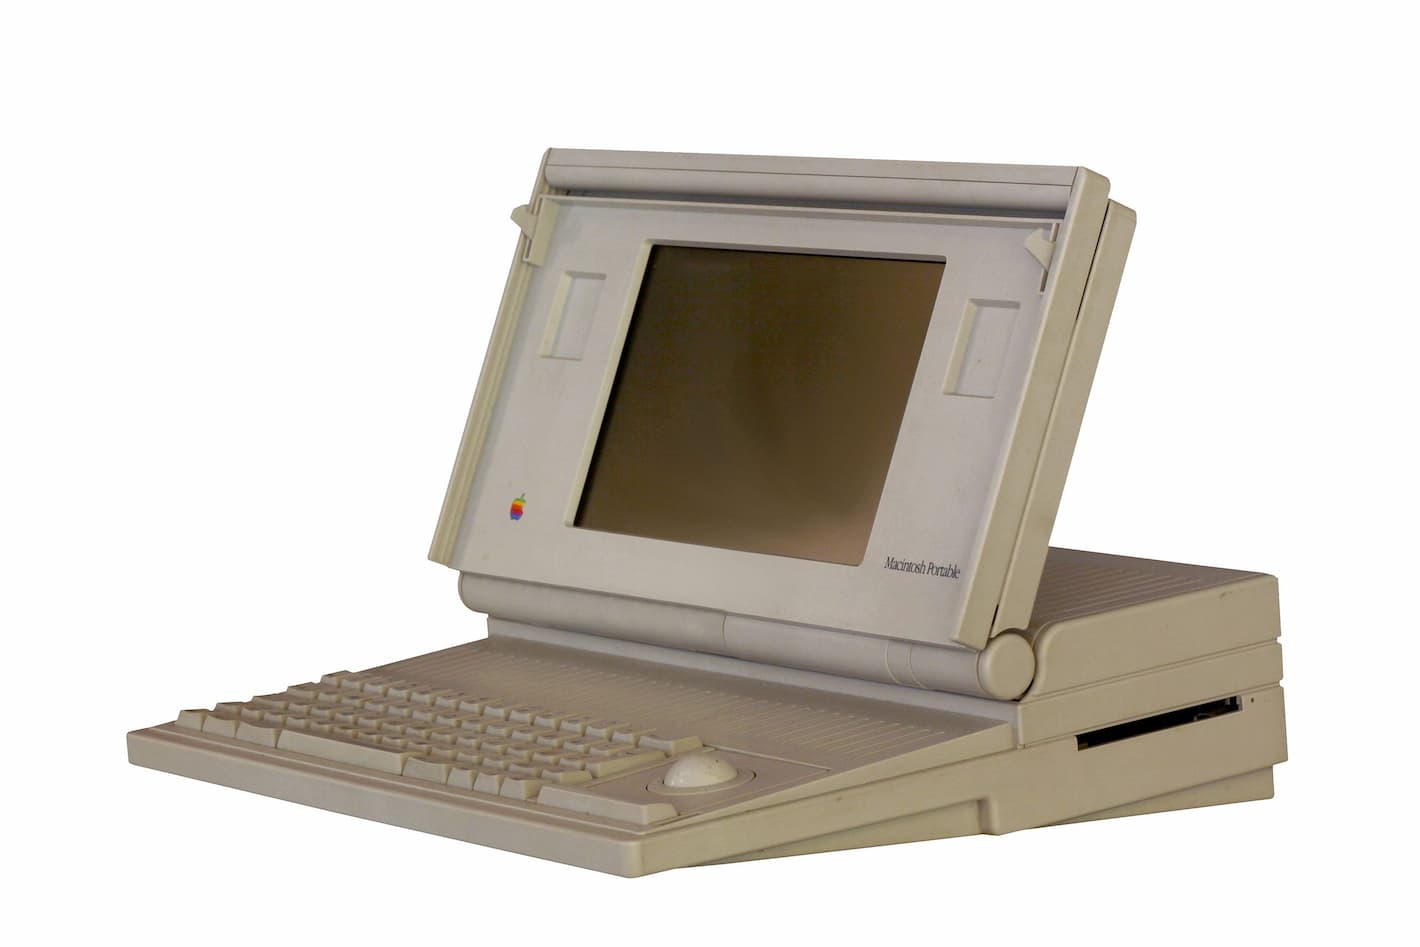 A Macintosh Portable